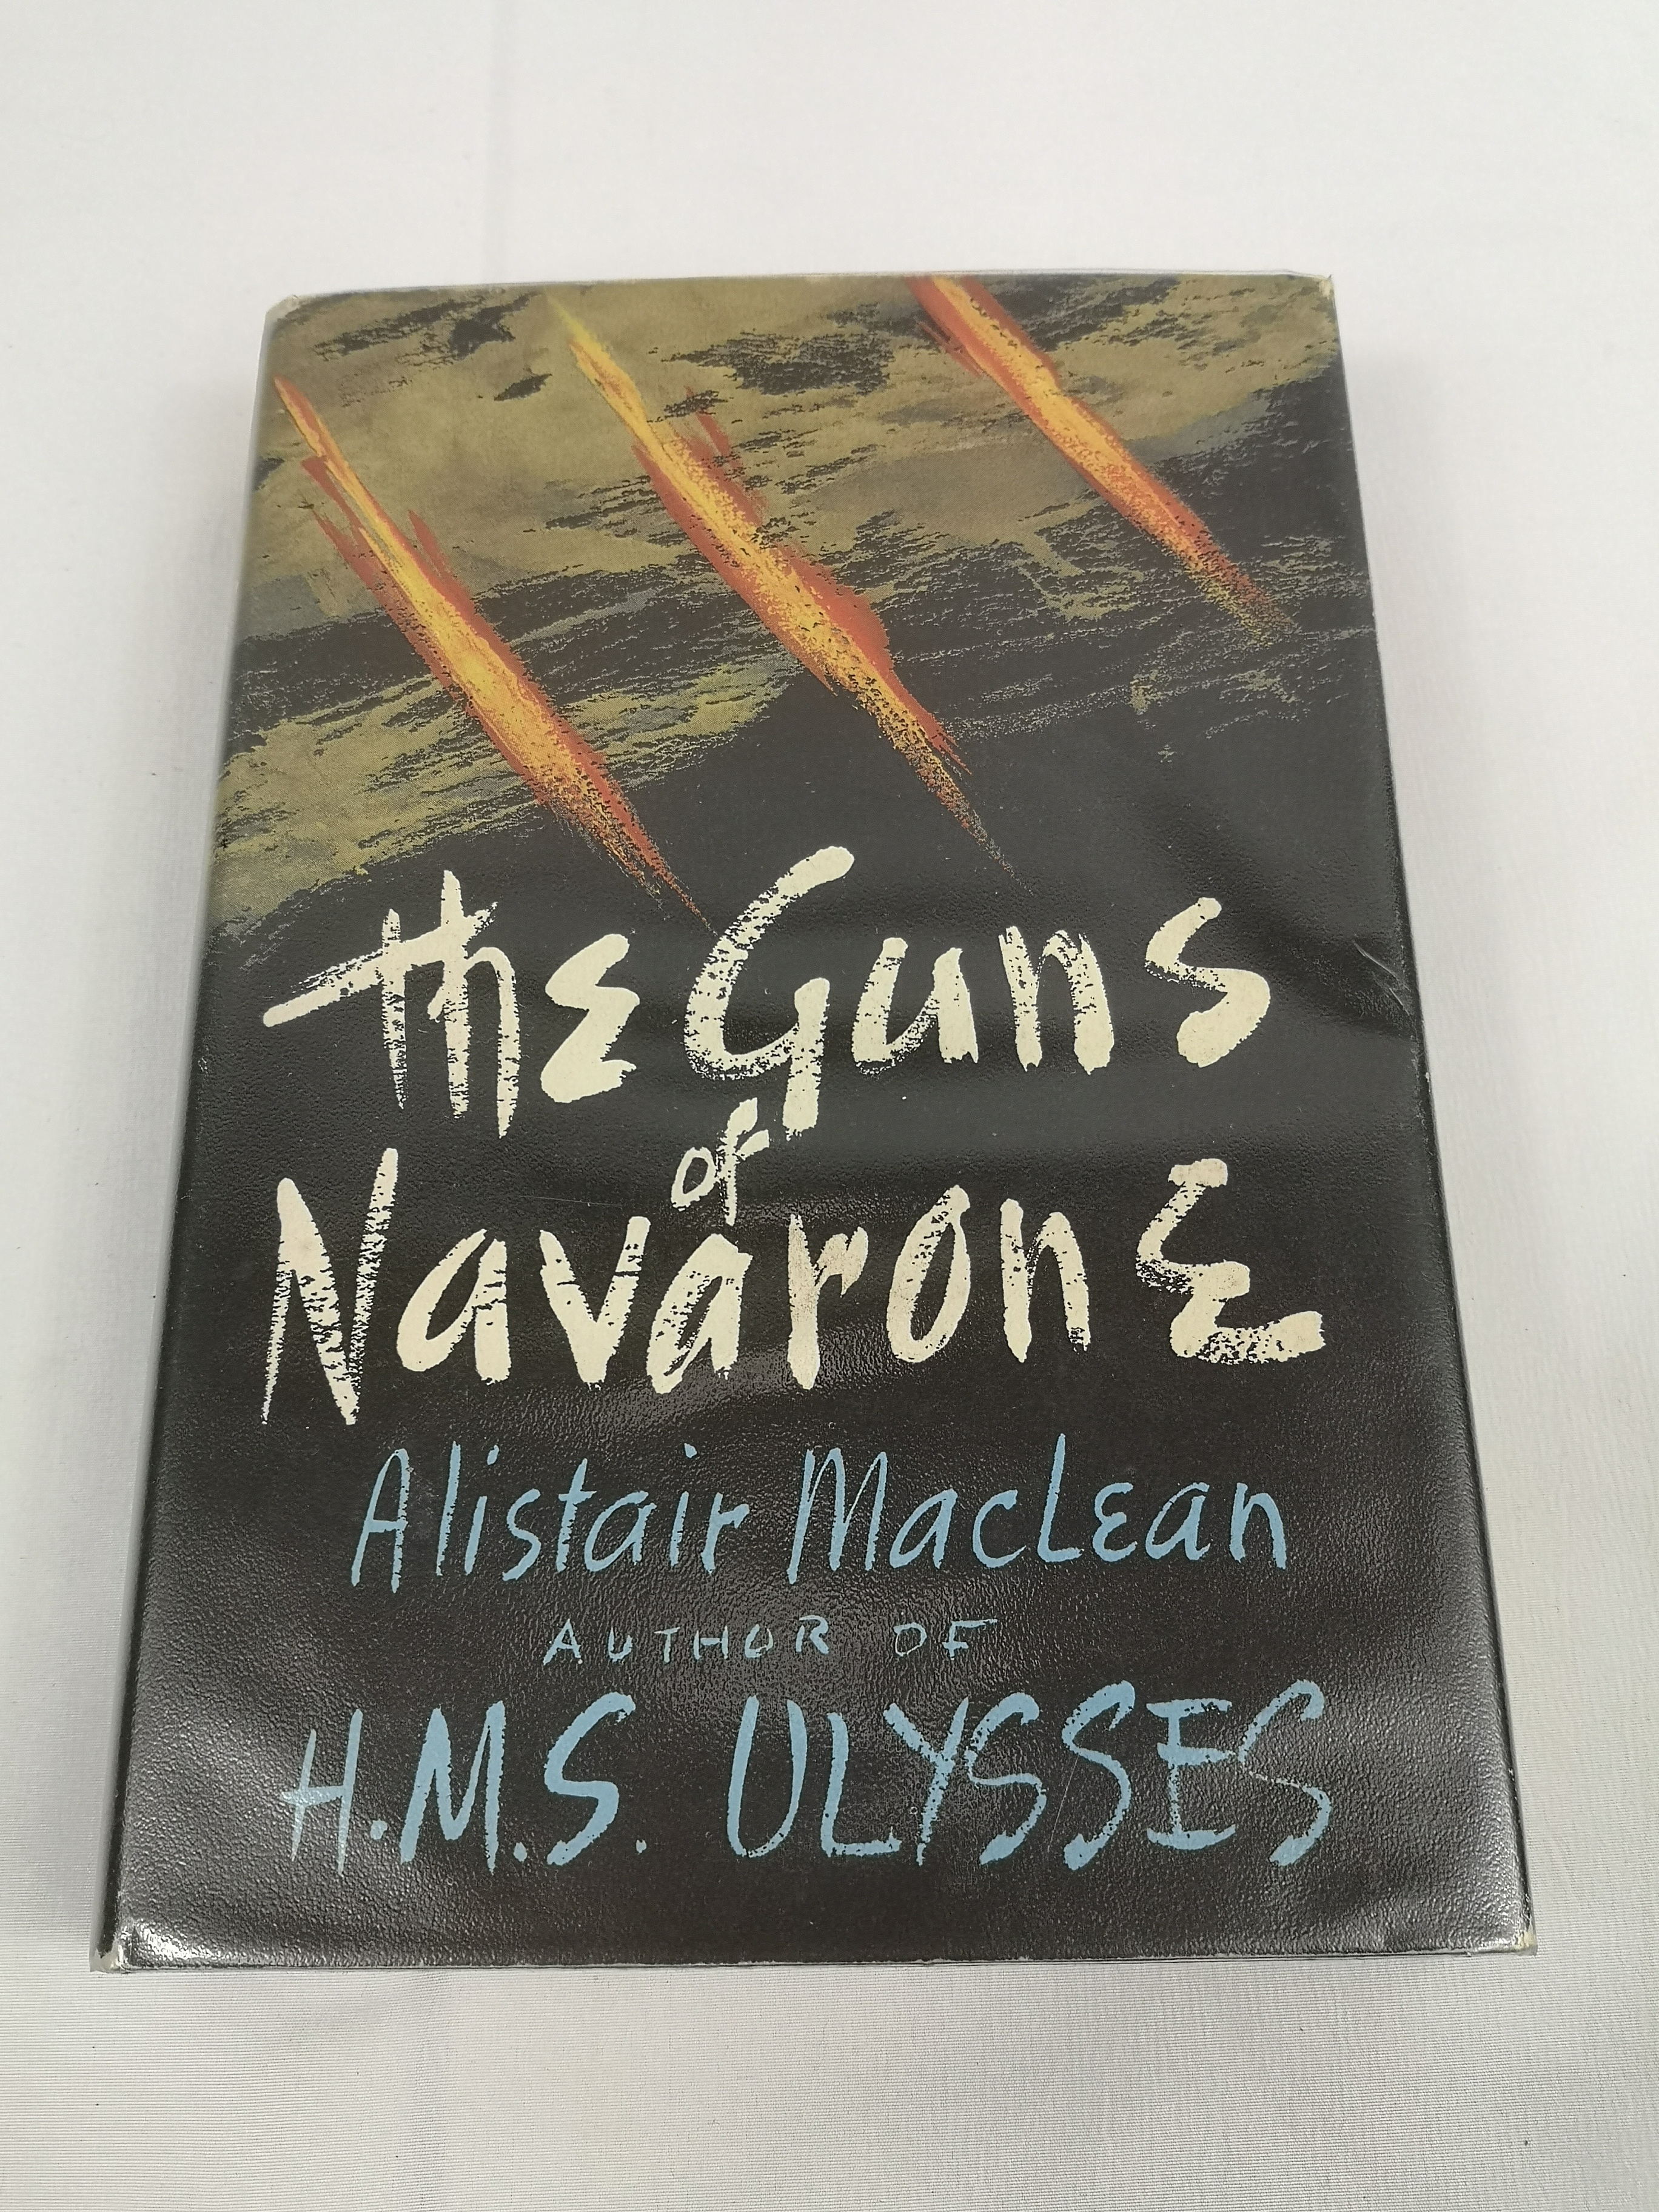 The Guns Of Navarone, Alistair Maclean, first edition.